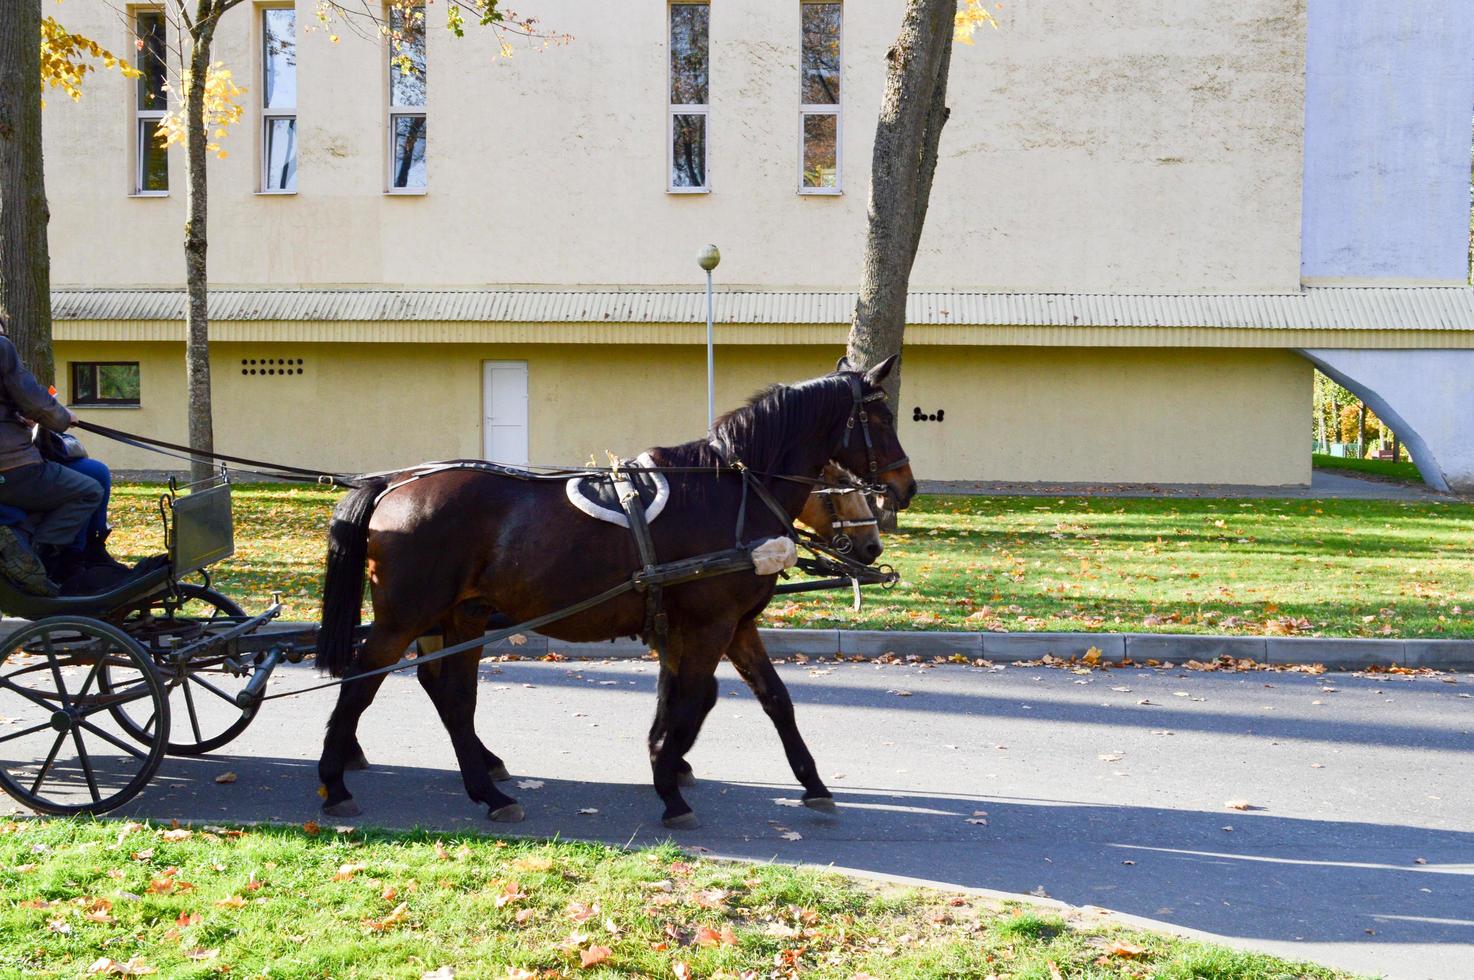 un hermoso caballo negro fuerte en el arnés tira del carruaje en el parque en una carretera asfaltada foto